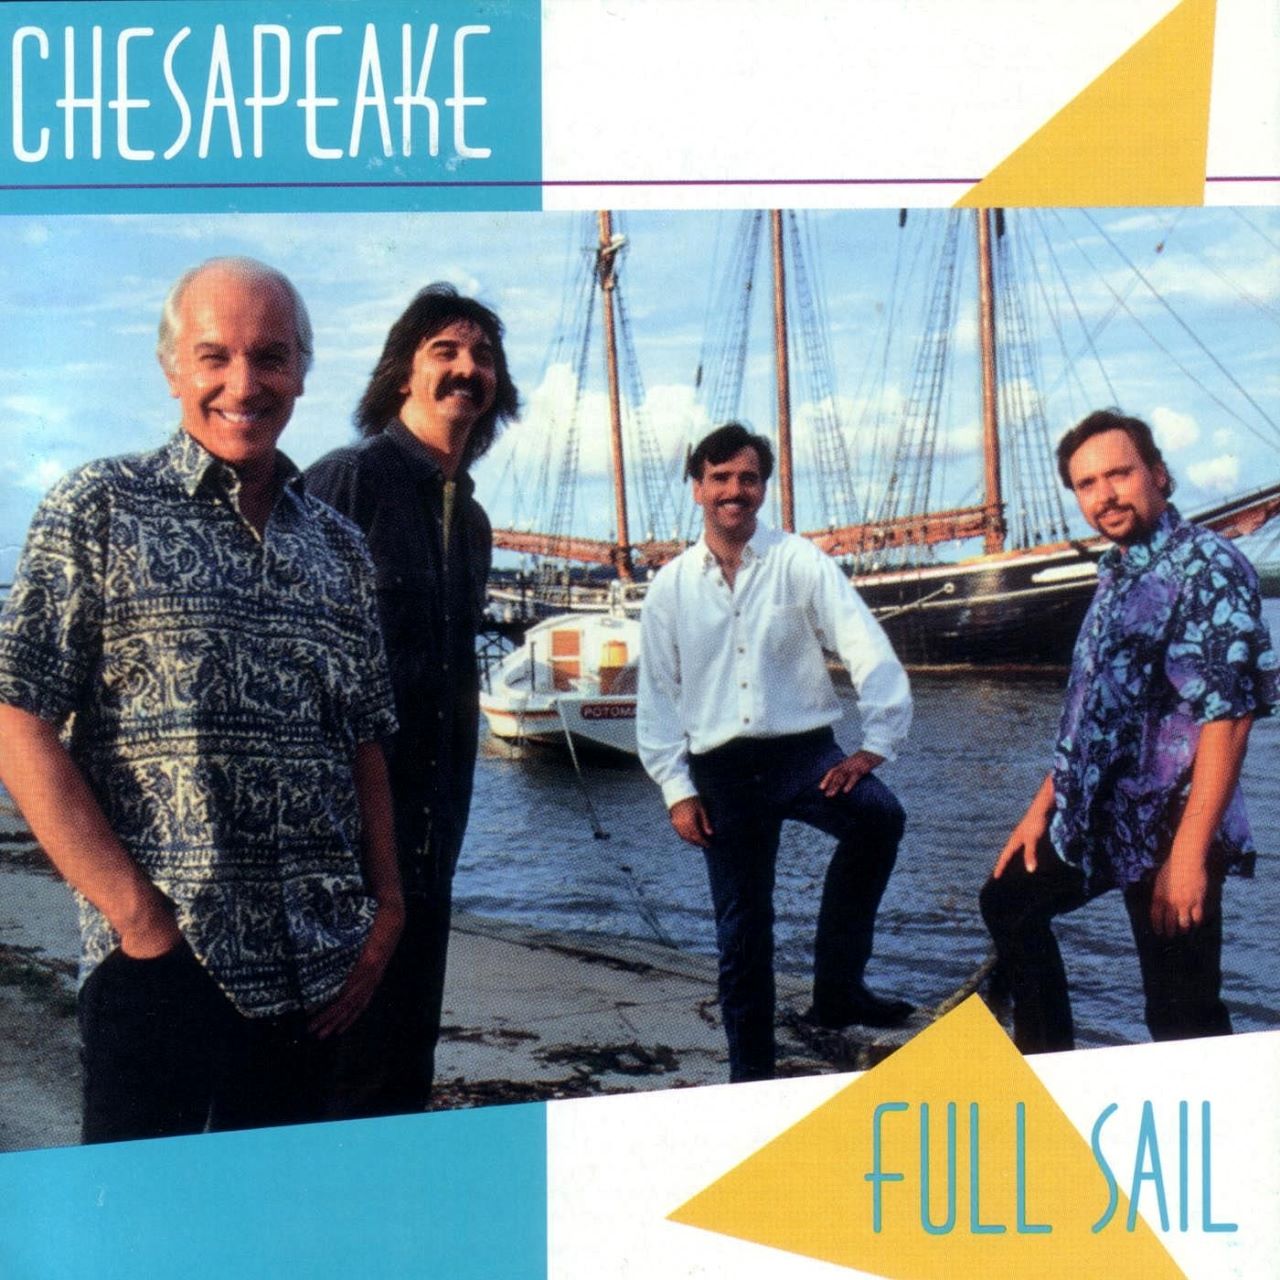 Chesapeake - Full Sail cover album